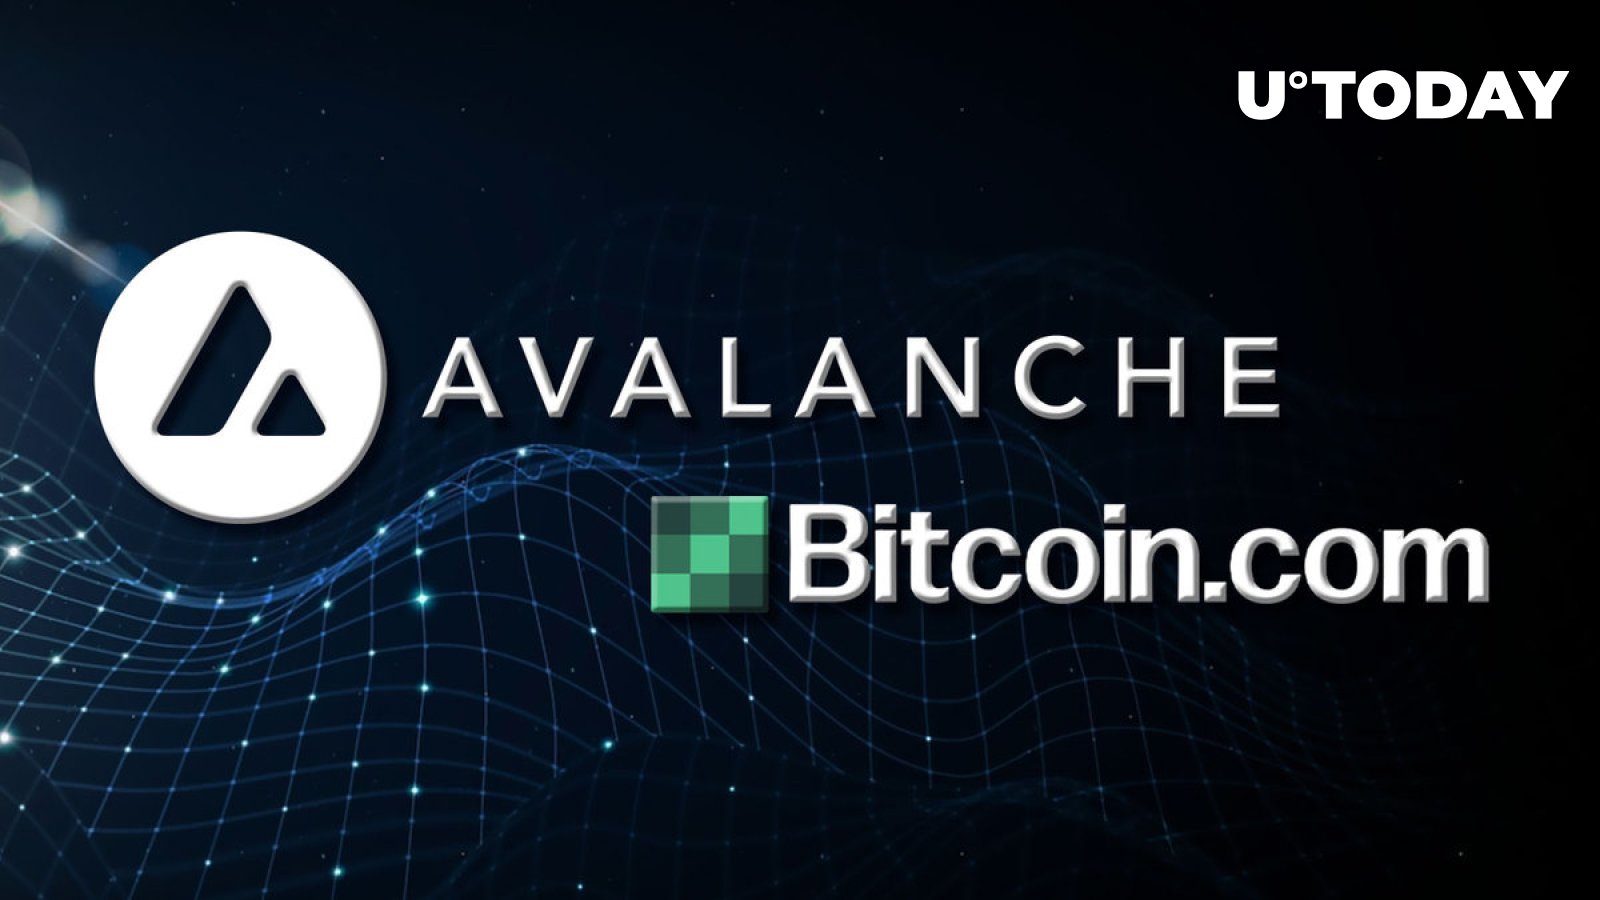 Avalanche (AVAX) Crypto Now Available in Bitcoin.com Wallet